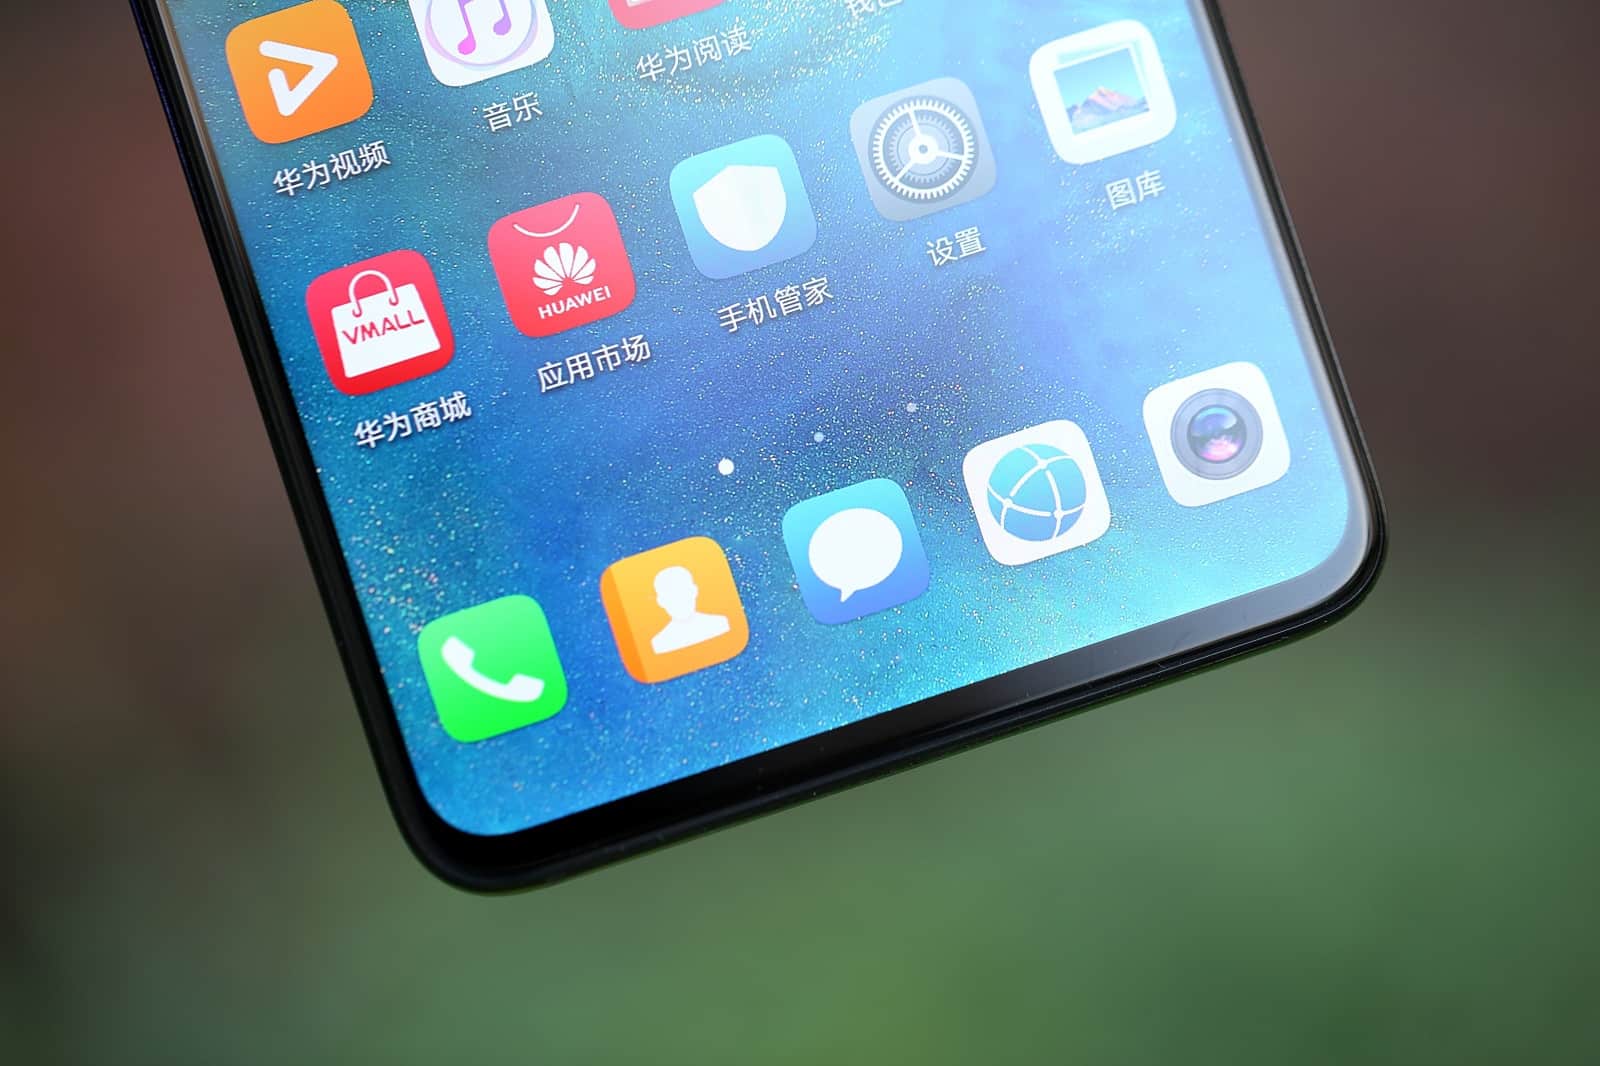 Boe will produce its 6th gen amoled screens in fuzhou, it’s a 46.5 billion yuan investment